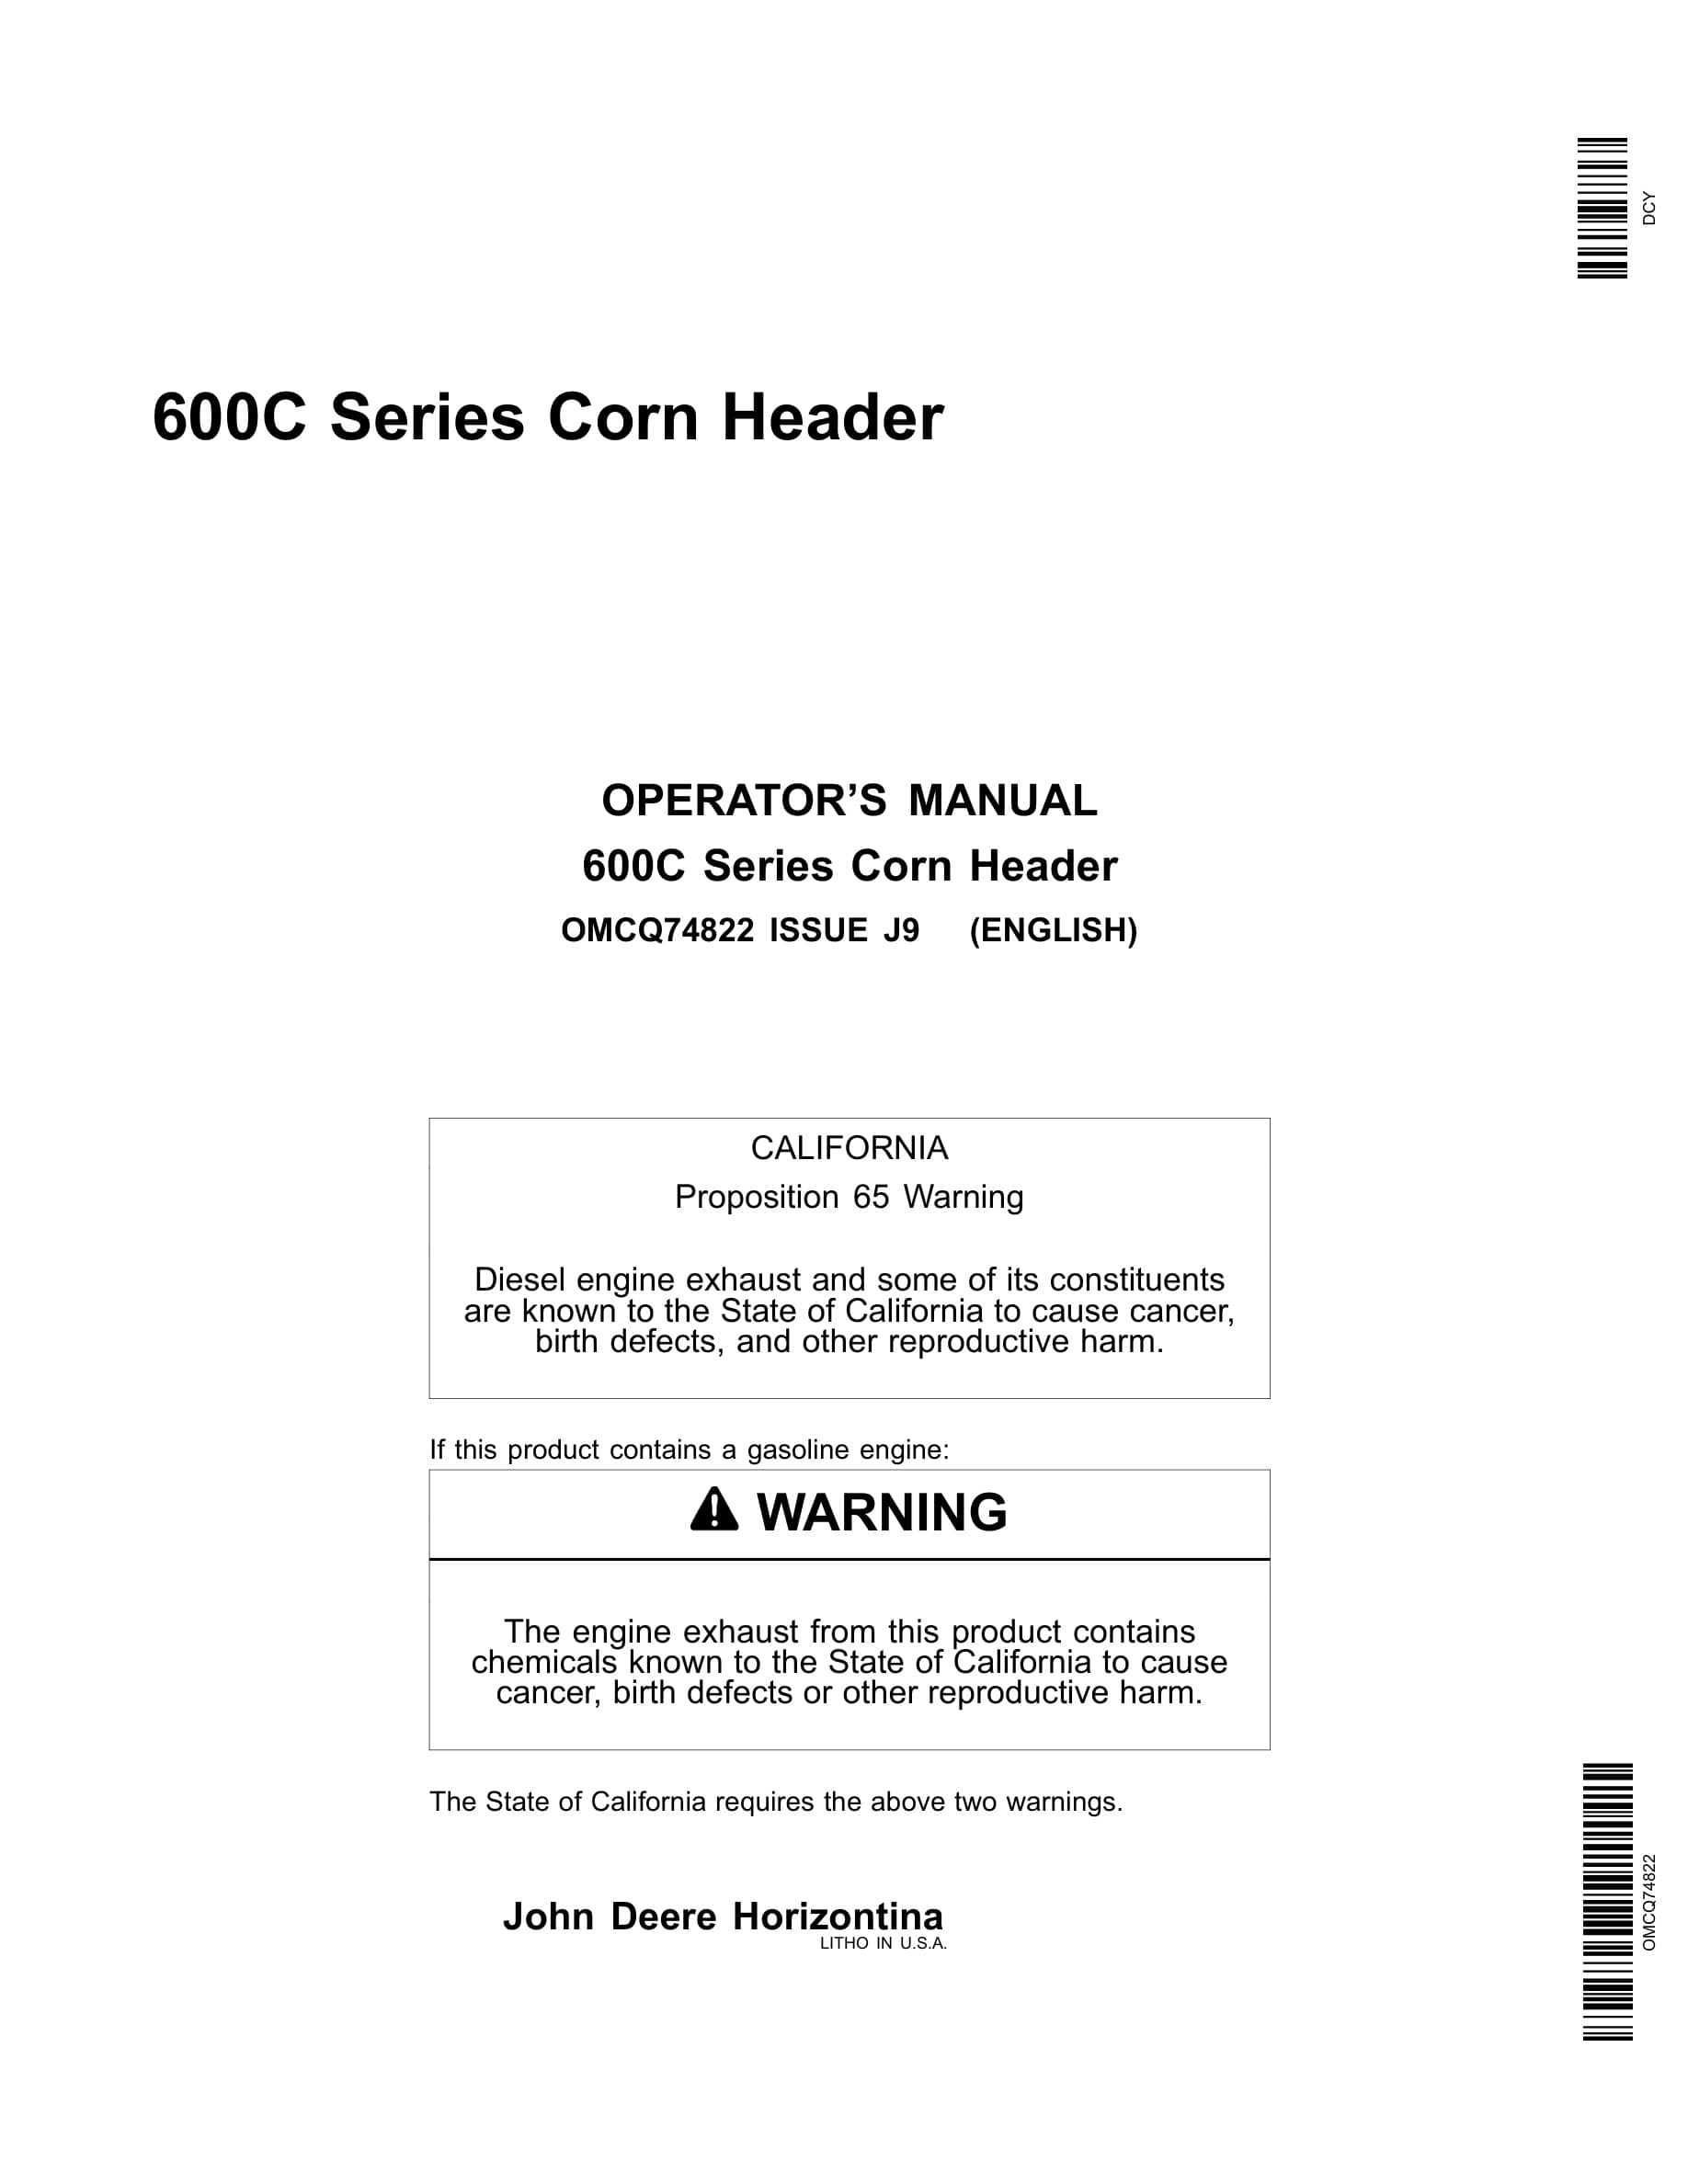 John Deere 600C Series Corn Header Operator Manual OMCQ74822-1